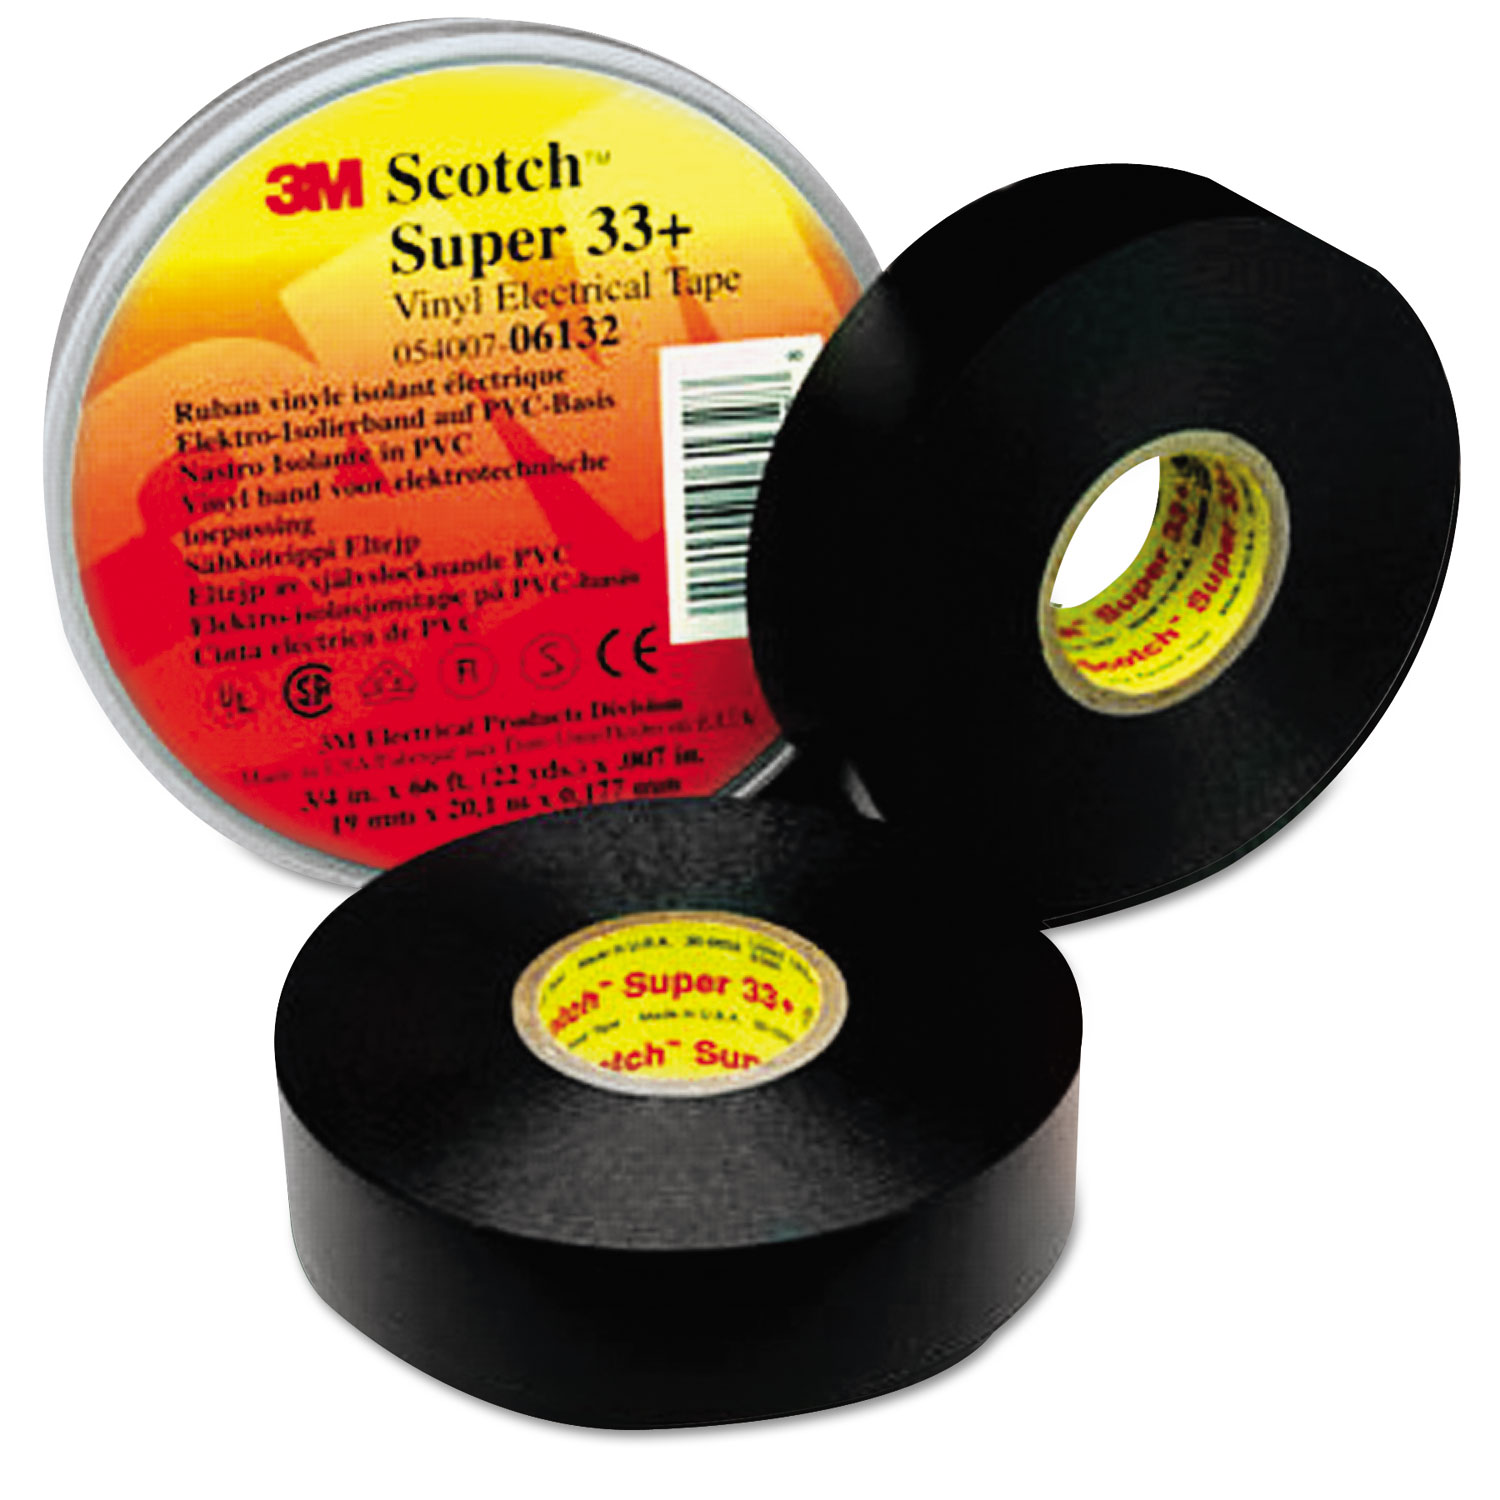  3M 80610833834 Scotch 33+ Super Vinyl Electrical Tape, 0.75 x 66 ft, Black (MMM06132) 